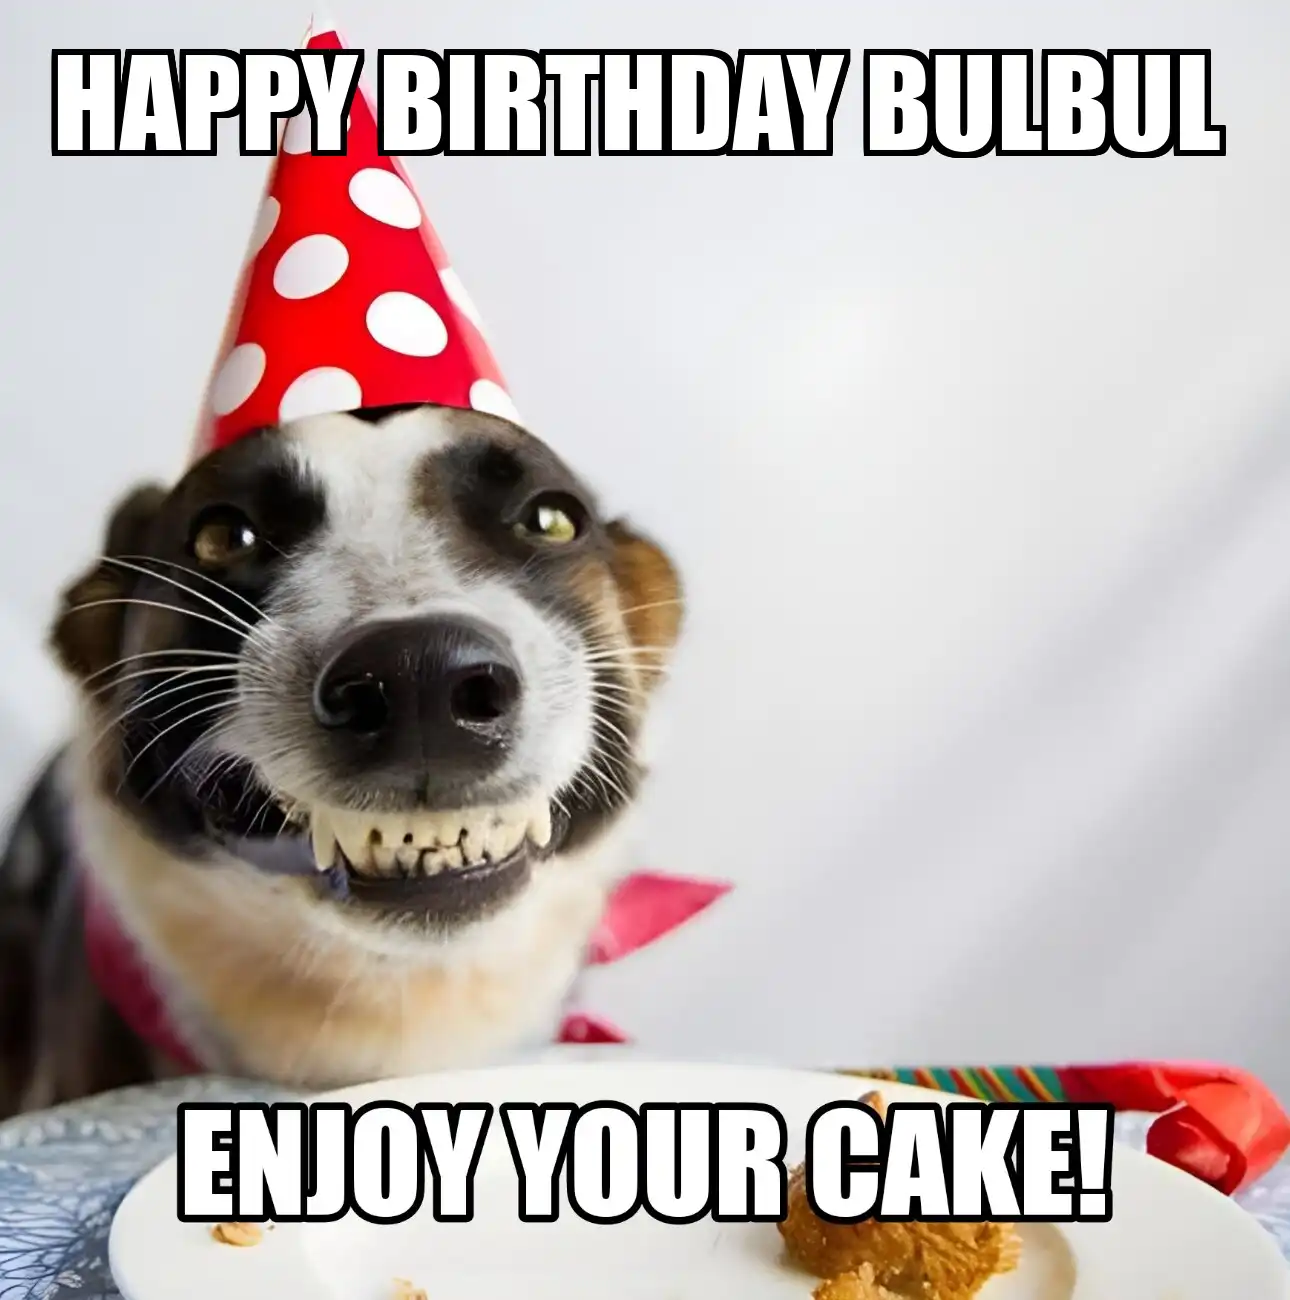 Happy Birthday Bulbul Enjoy Your Cake Dog Meme